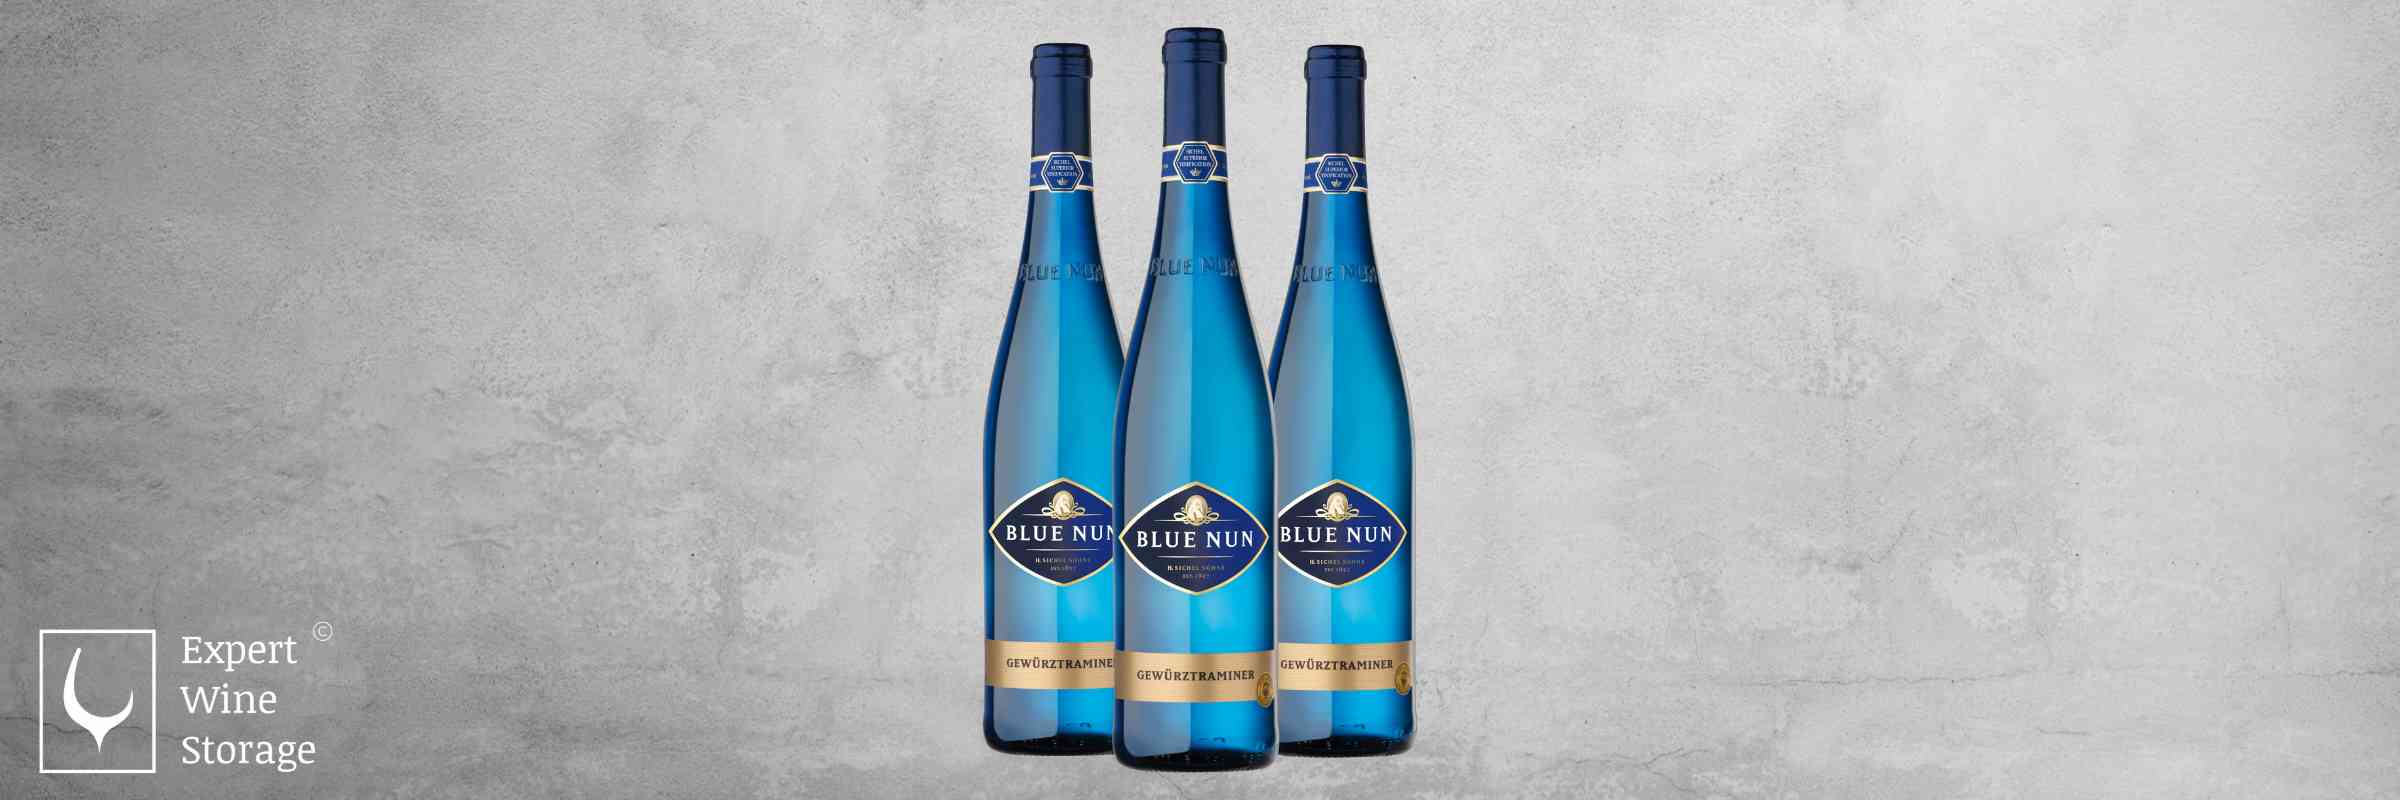 Blue Nun Wine Bottles